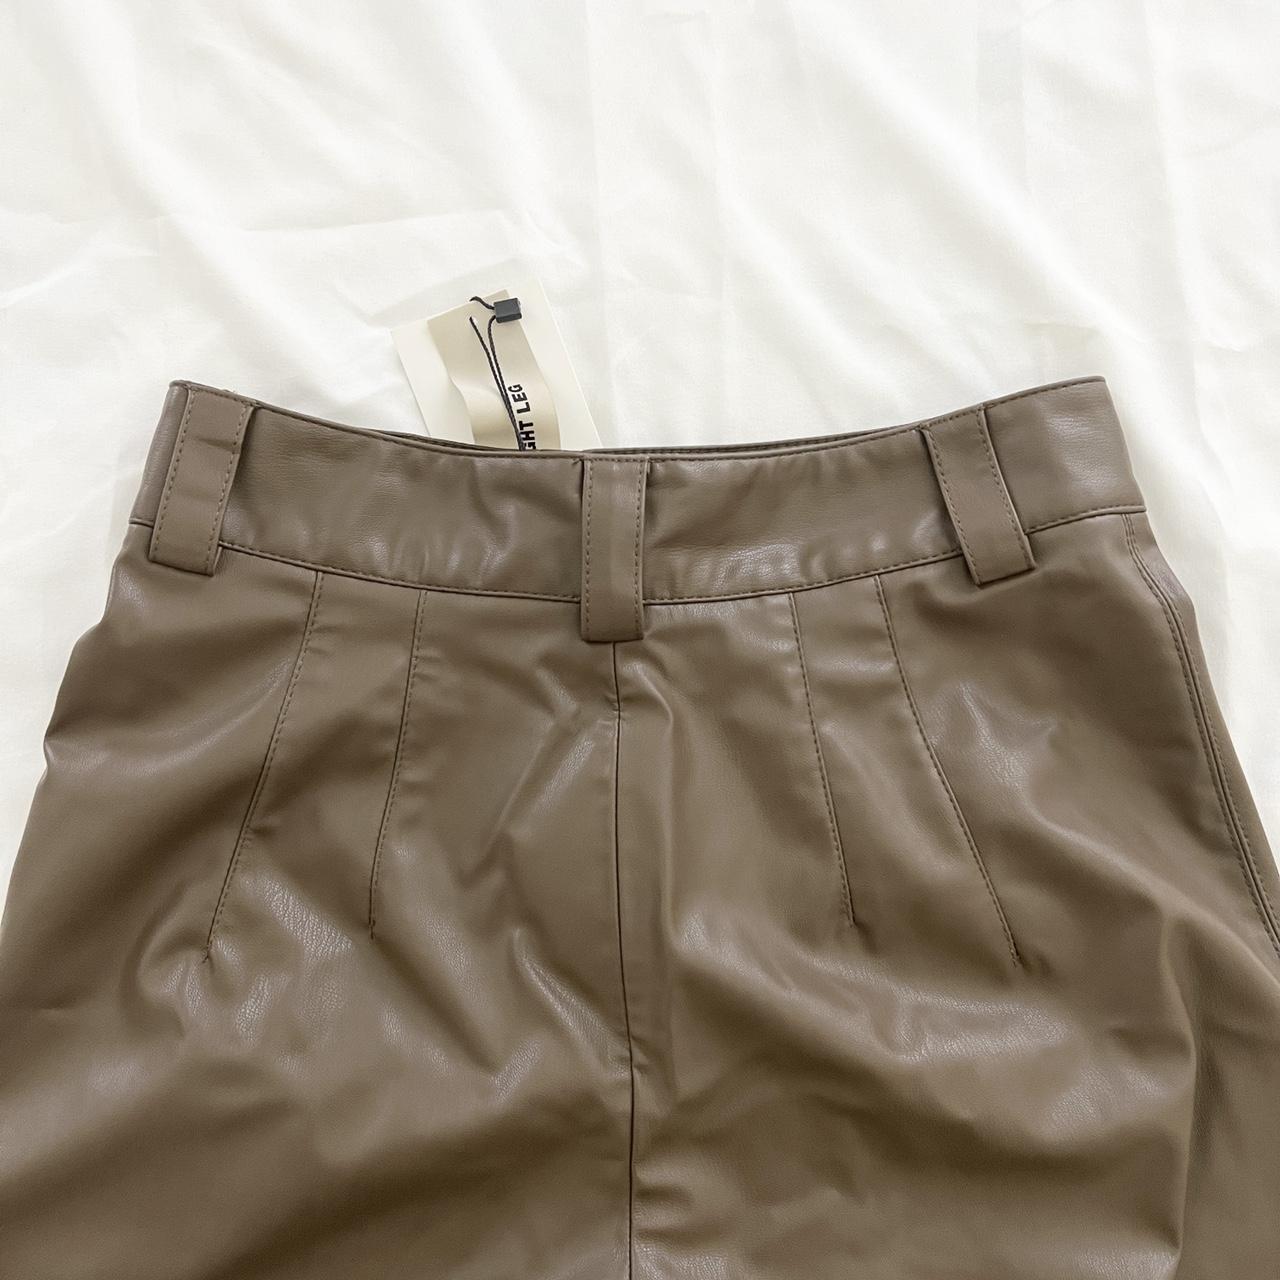 ZARA BROWN LEATHER PANTS BNWT - brown faux leather... - Depop